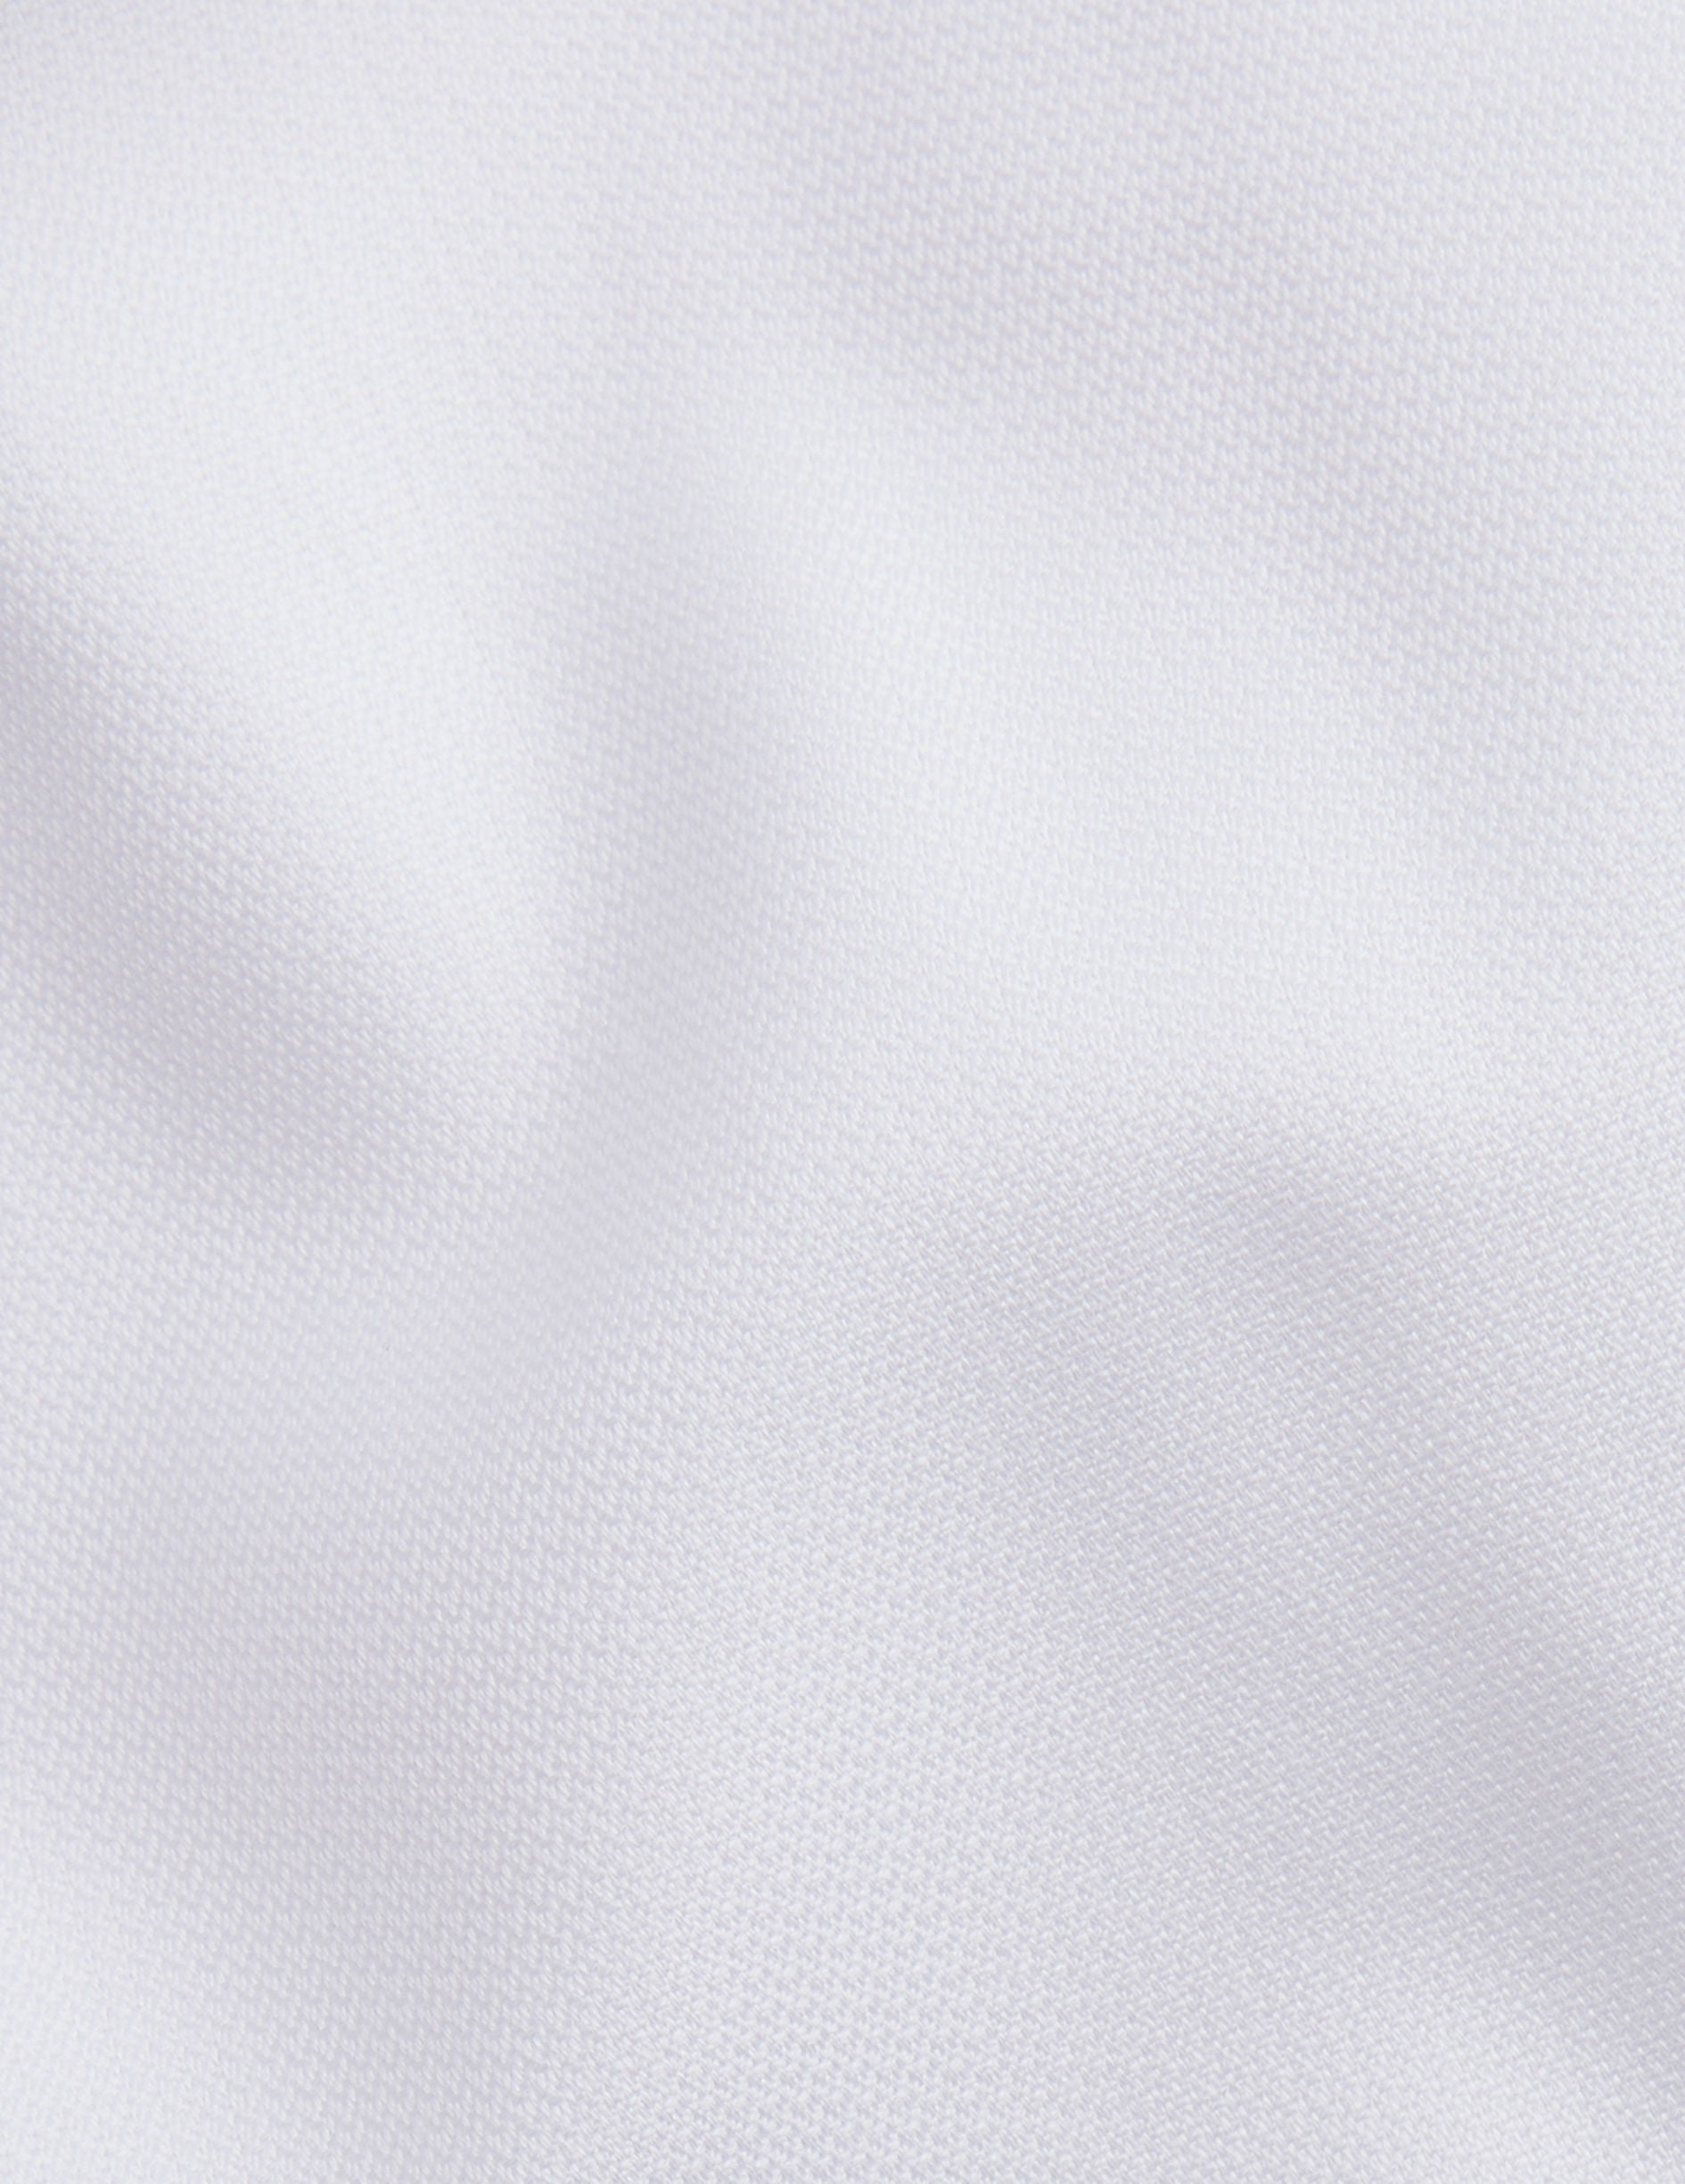 Classic white shirt - Shaped - Figaret Collar